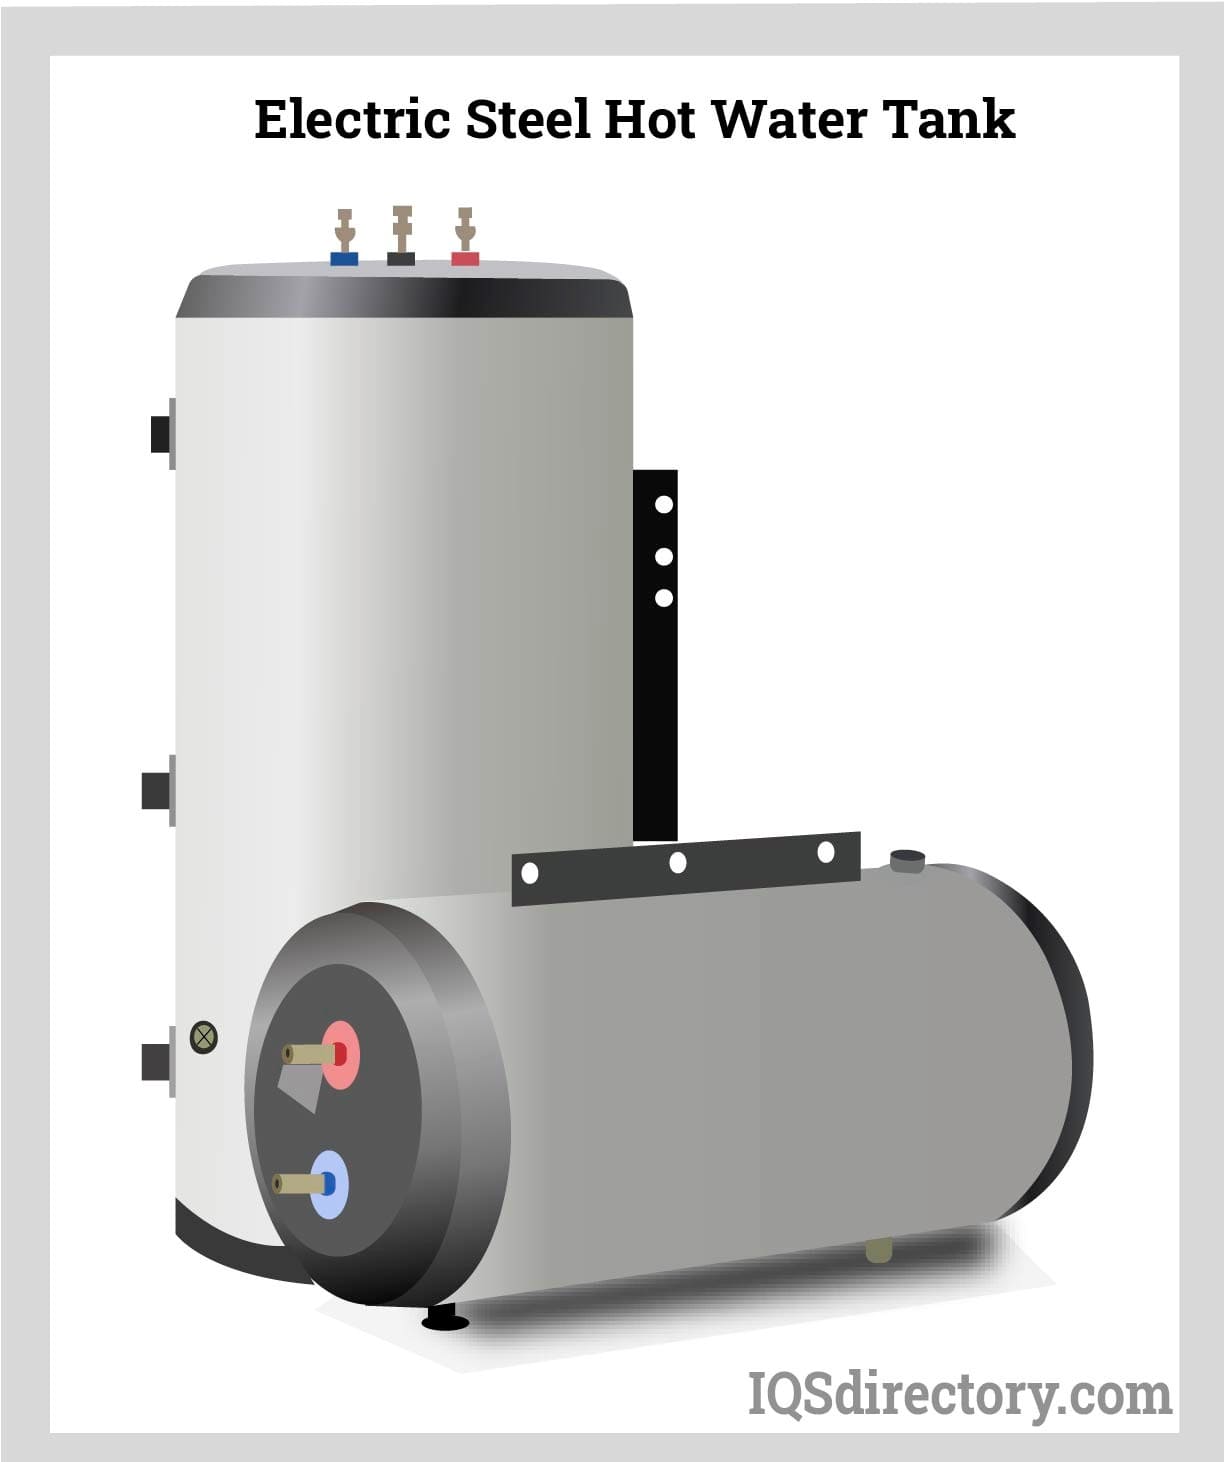 Electric Steel Hot Water Tank